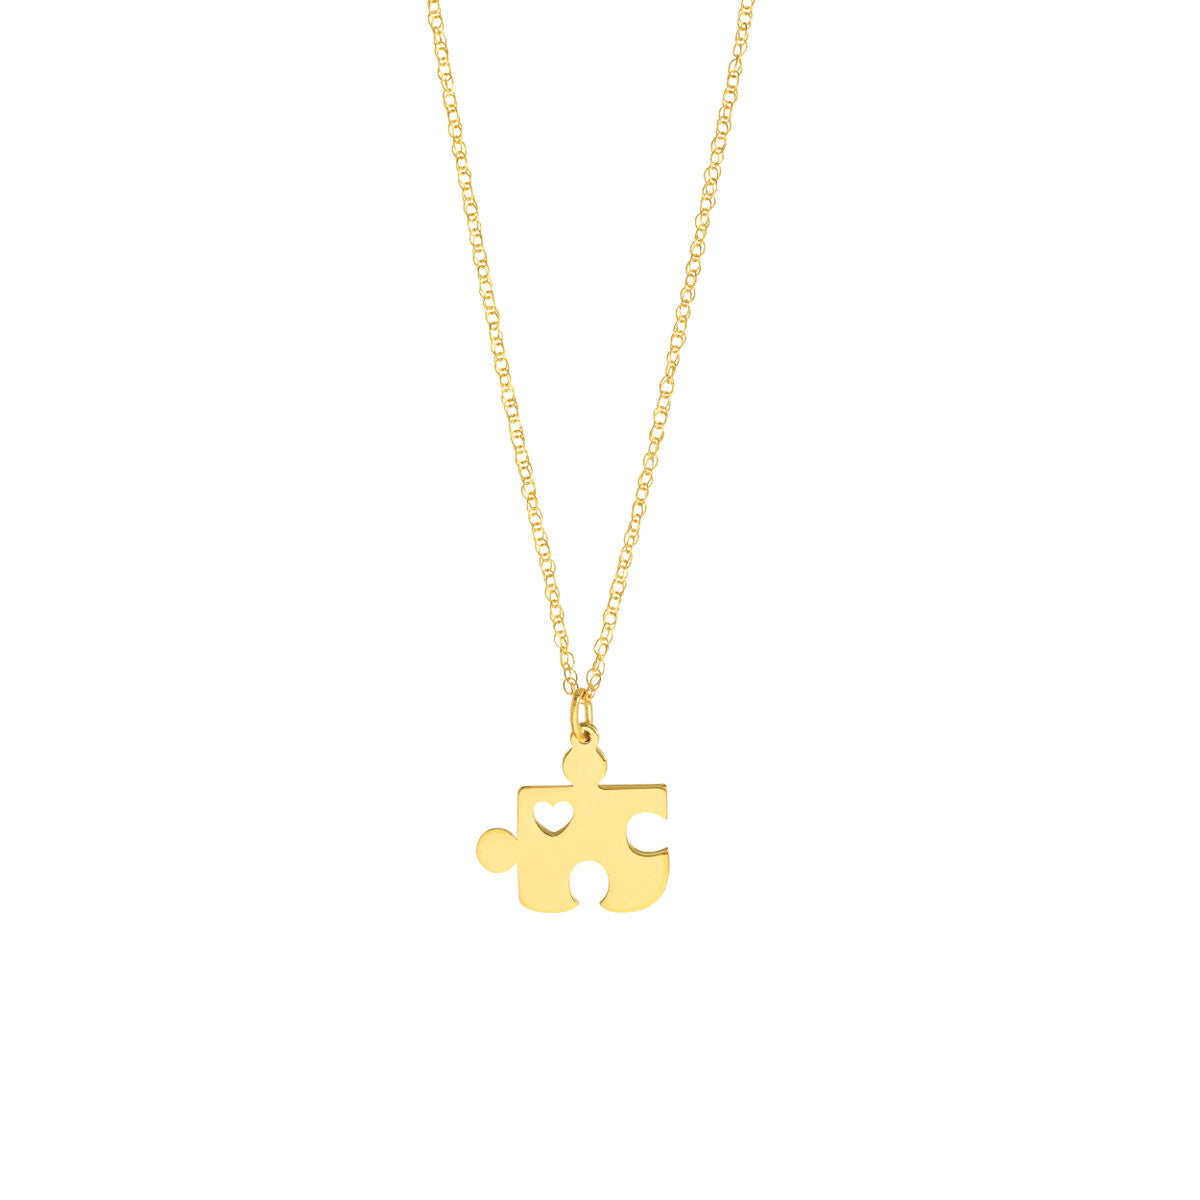 Gold Puzzle Piece Necklace - Alexis Jae Jewelry